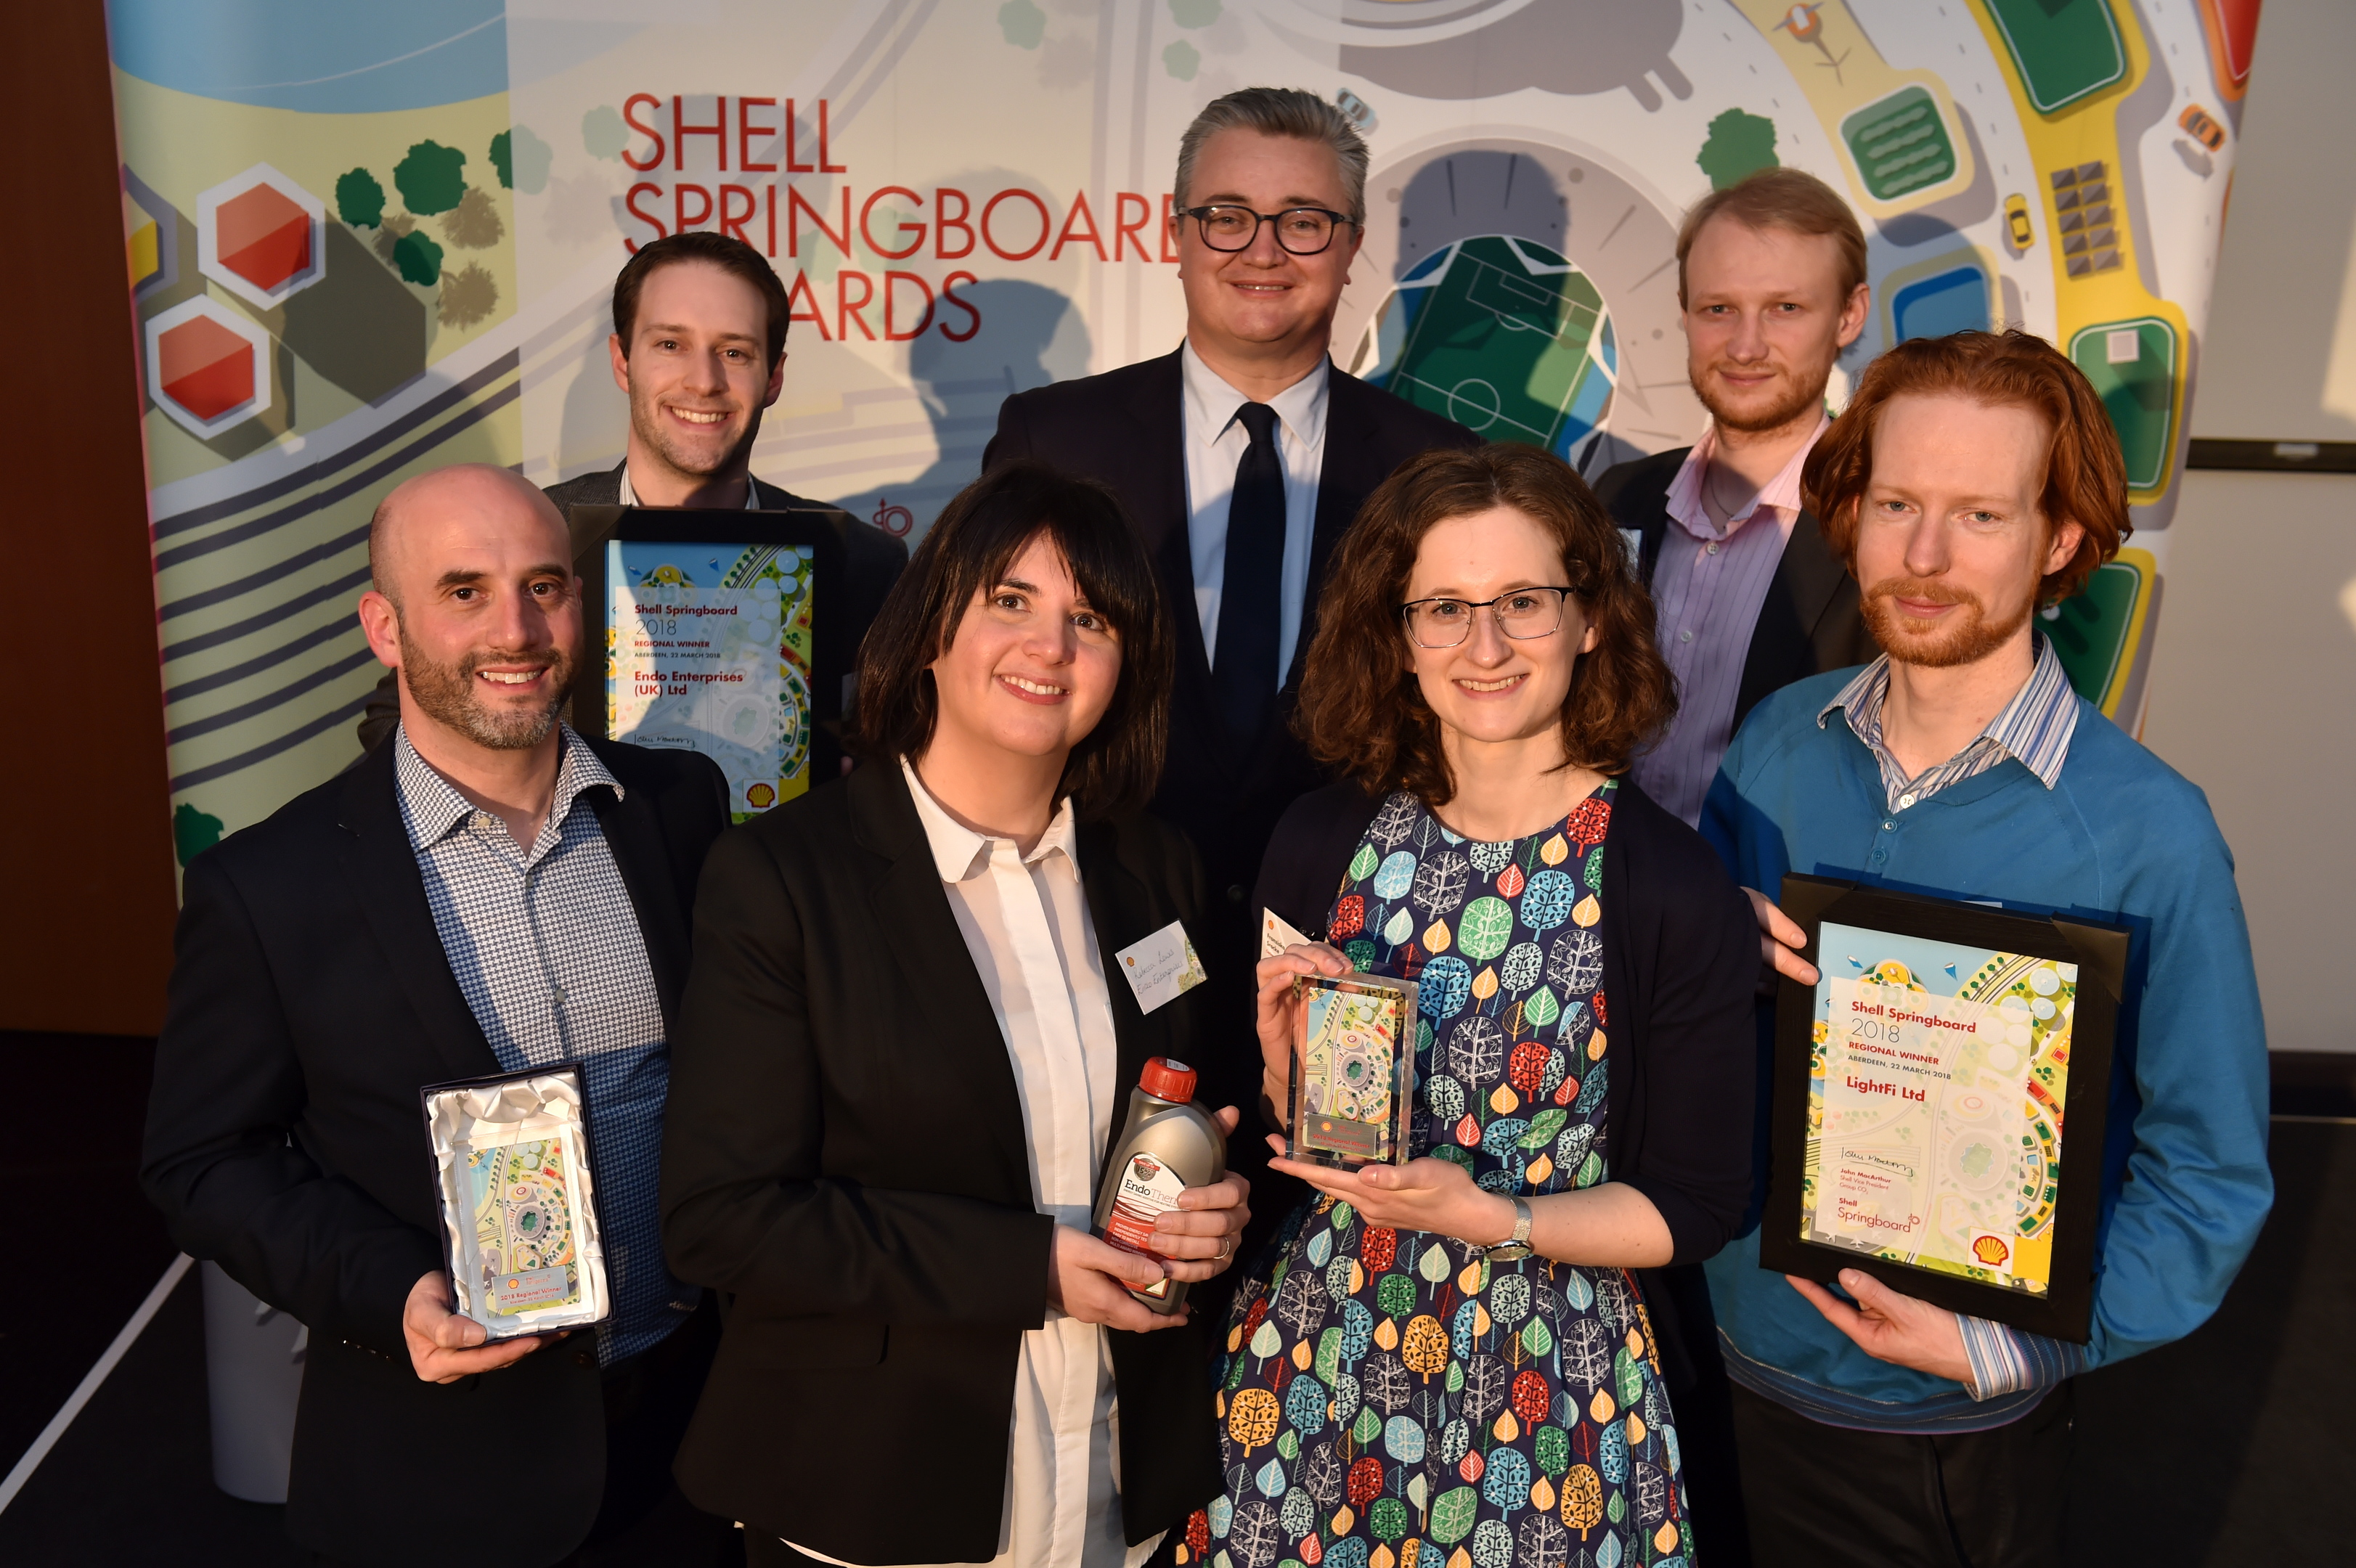 Shell Springboard Awards and Networking 2018 at Aberdeen Exhibition and Conference Centre (AECC).
Picture of winners (L-R) Benjamin Sallon, Adrian polak, Rebecca Lewis, John MacArthur, Franziska Srocke, Alex Bak and Matt Taylor.